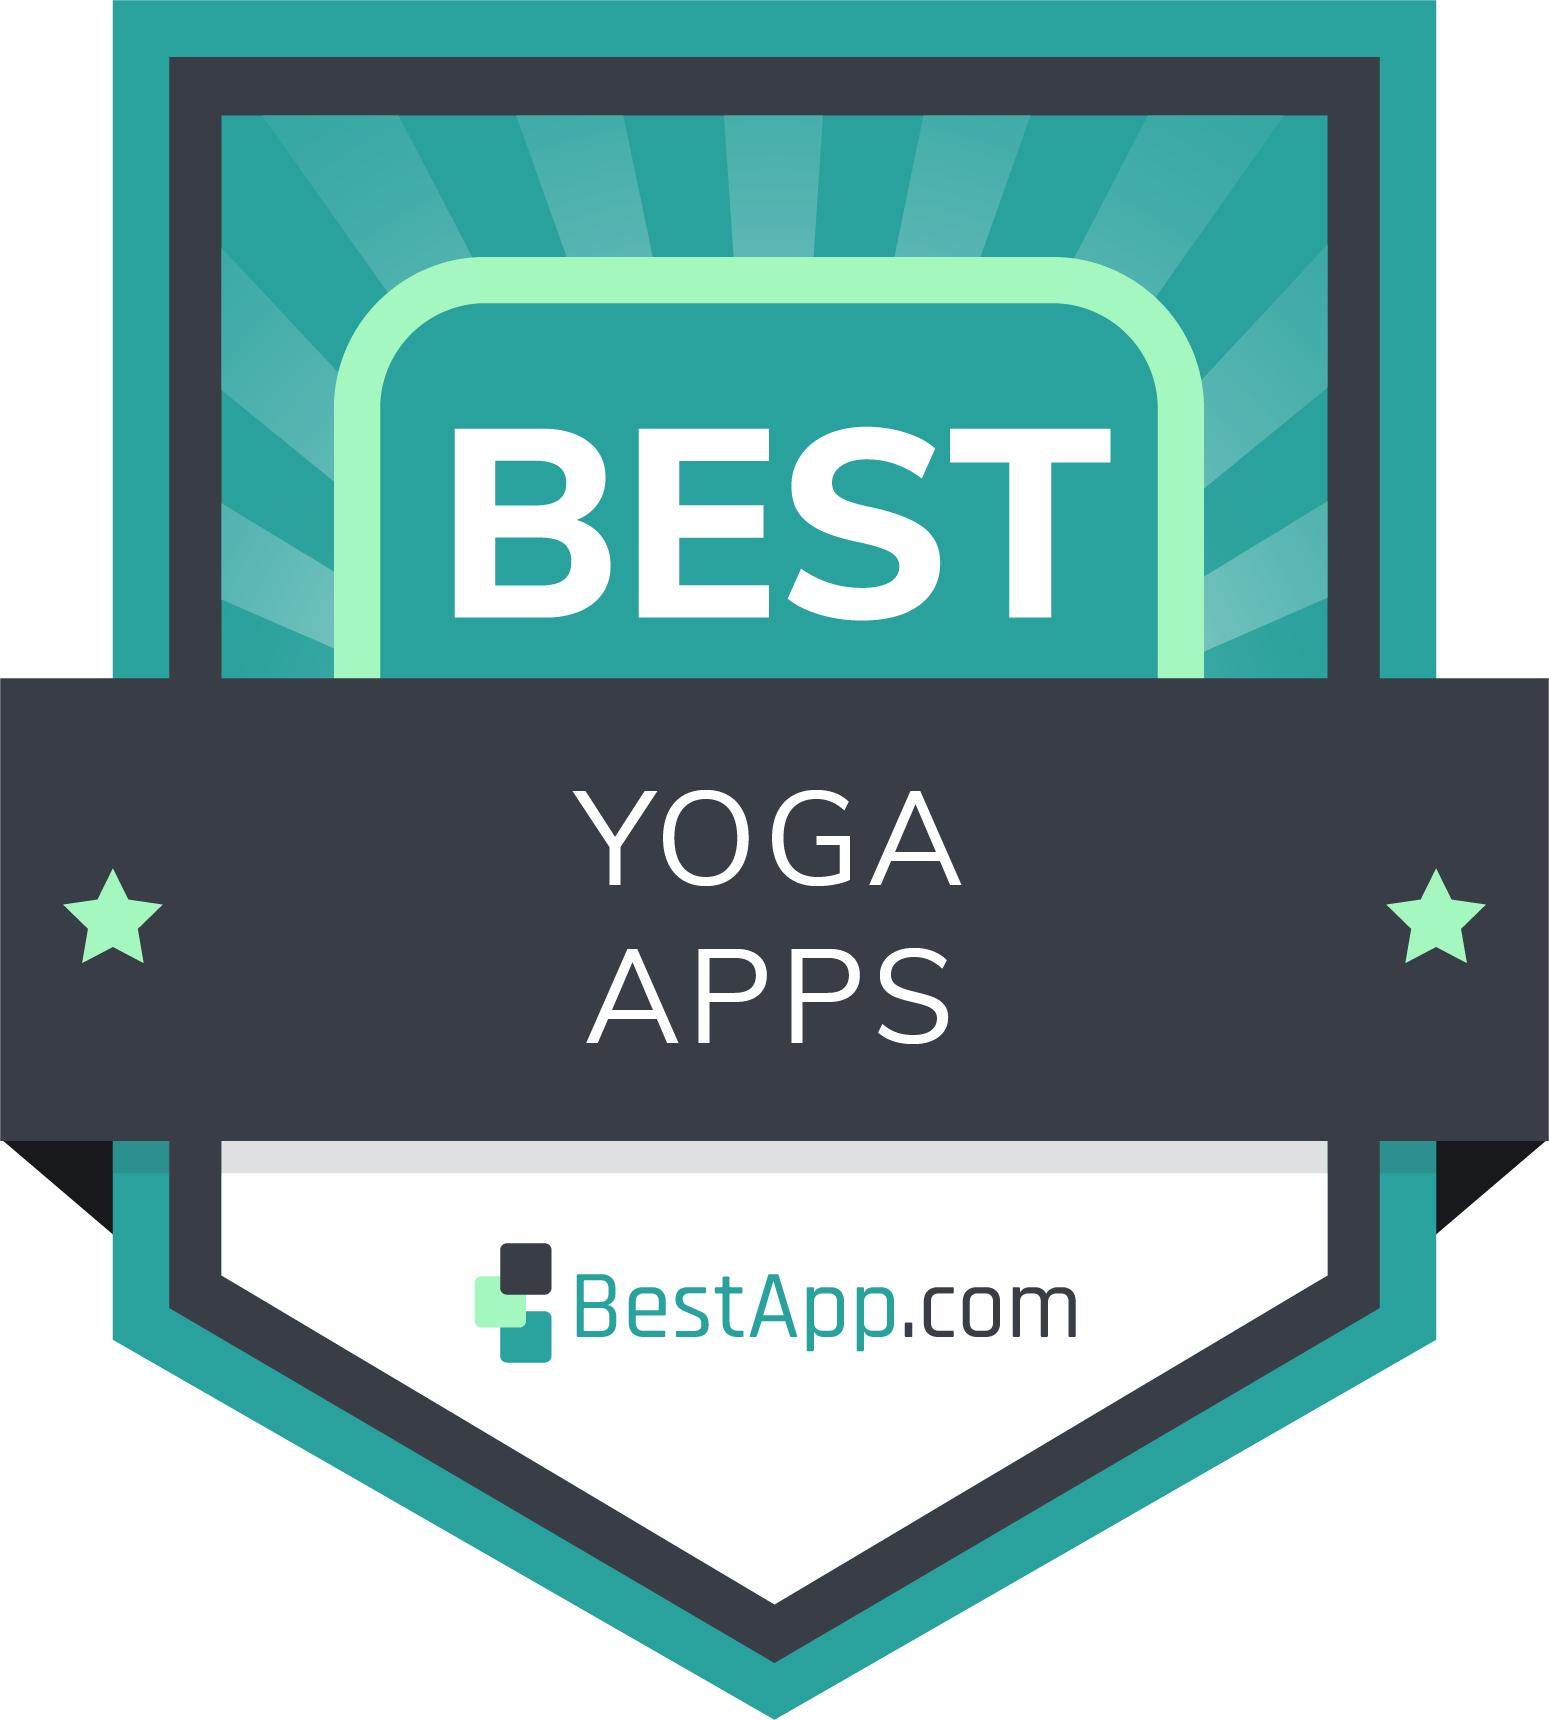 Best Yoga Apps Badge